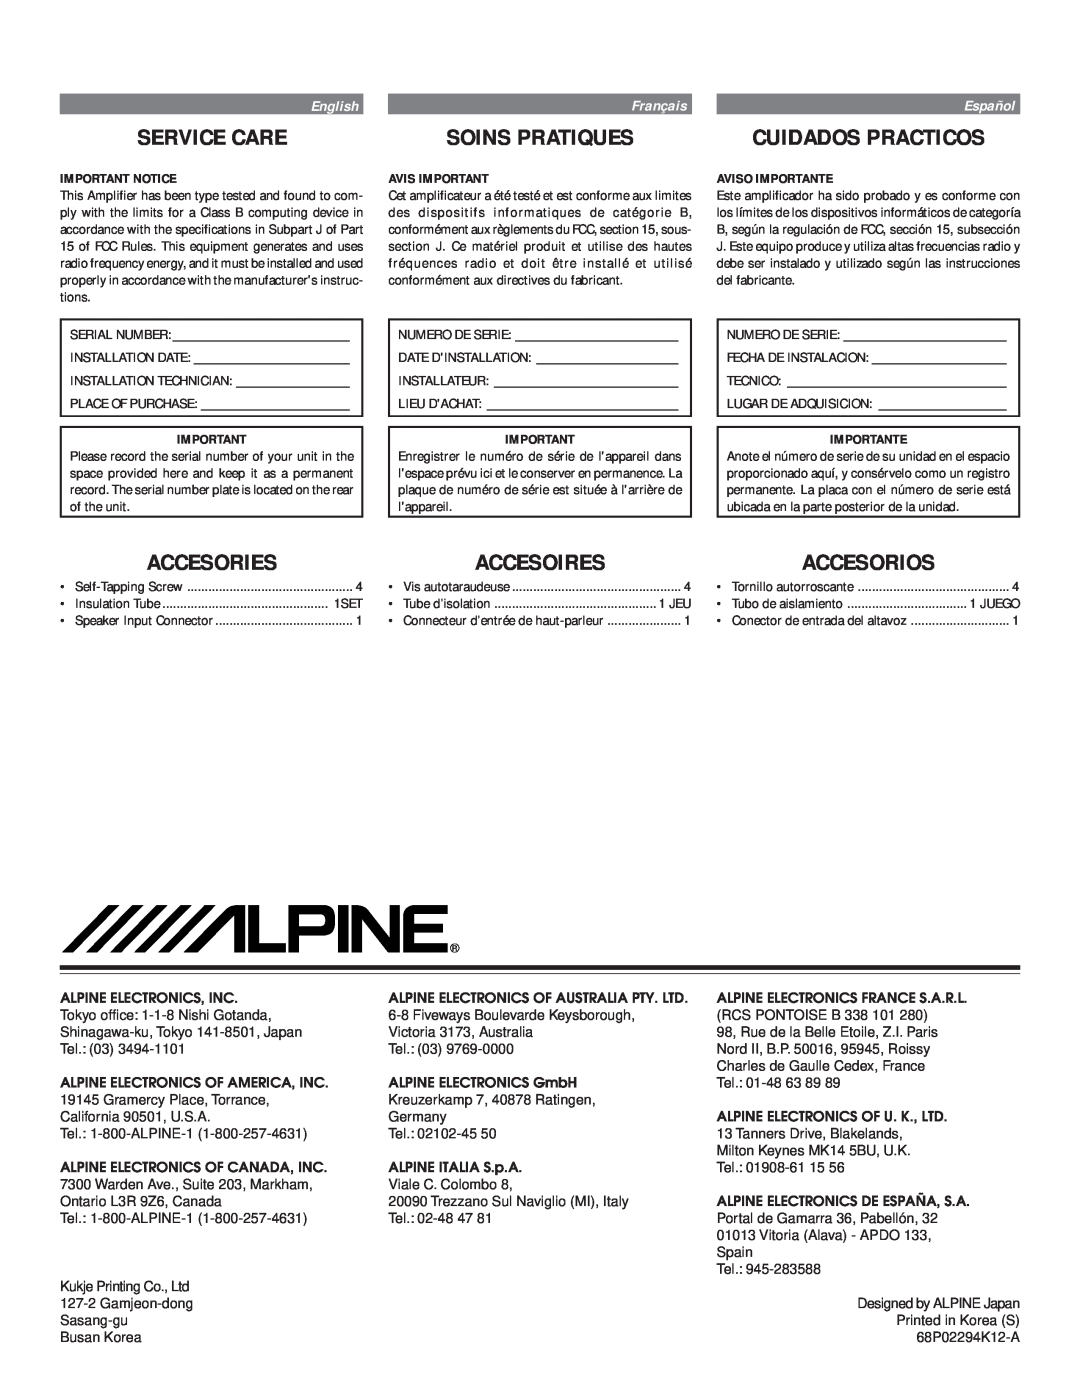 Alpine MRP-M200 Service Care, Soins Pratiques, Cuidados Practicos, Accesories, Accesoires, Accesorios, English, Français 